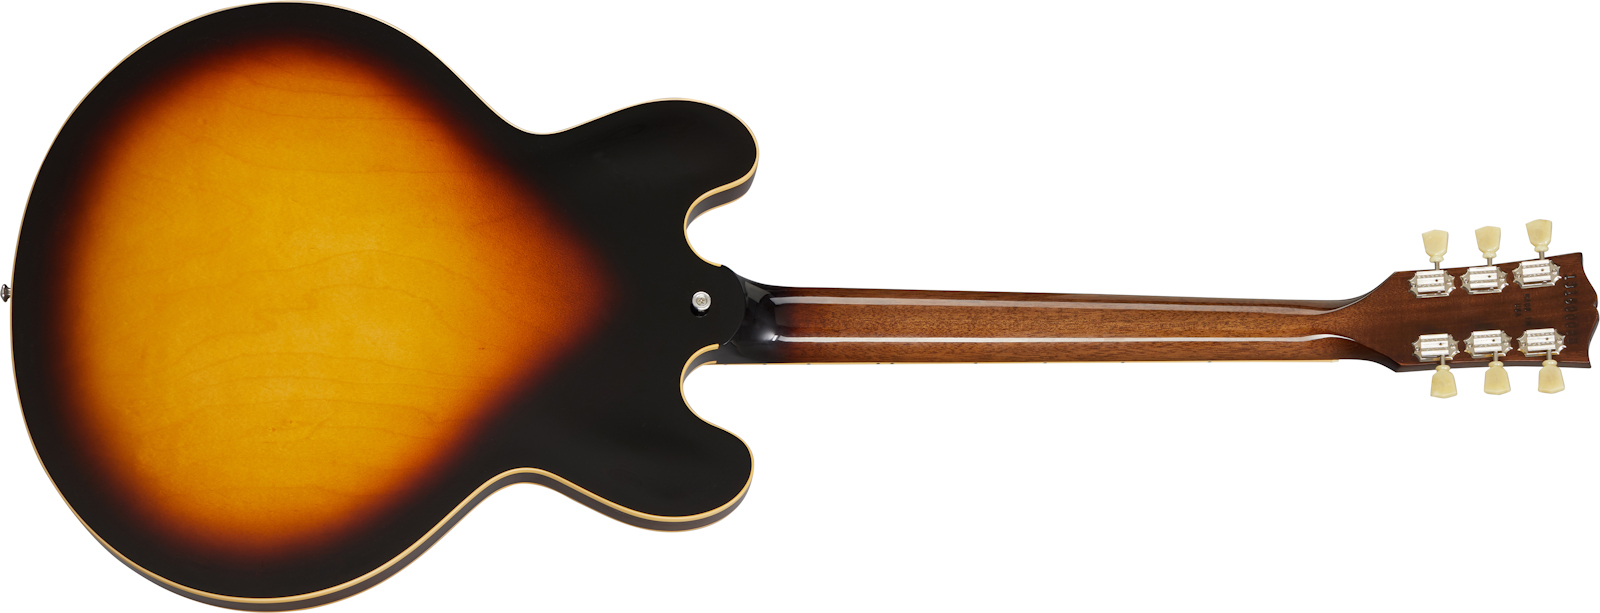 Gibson Es-335 Dot Lh Original 2020 Gaucher 2h Ht Rw - Vintage Burst - Left-handed electric guitar - Variation 1